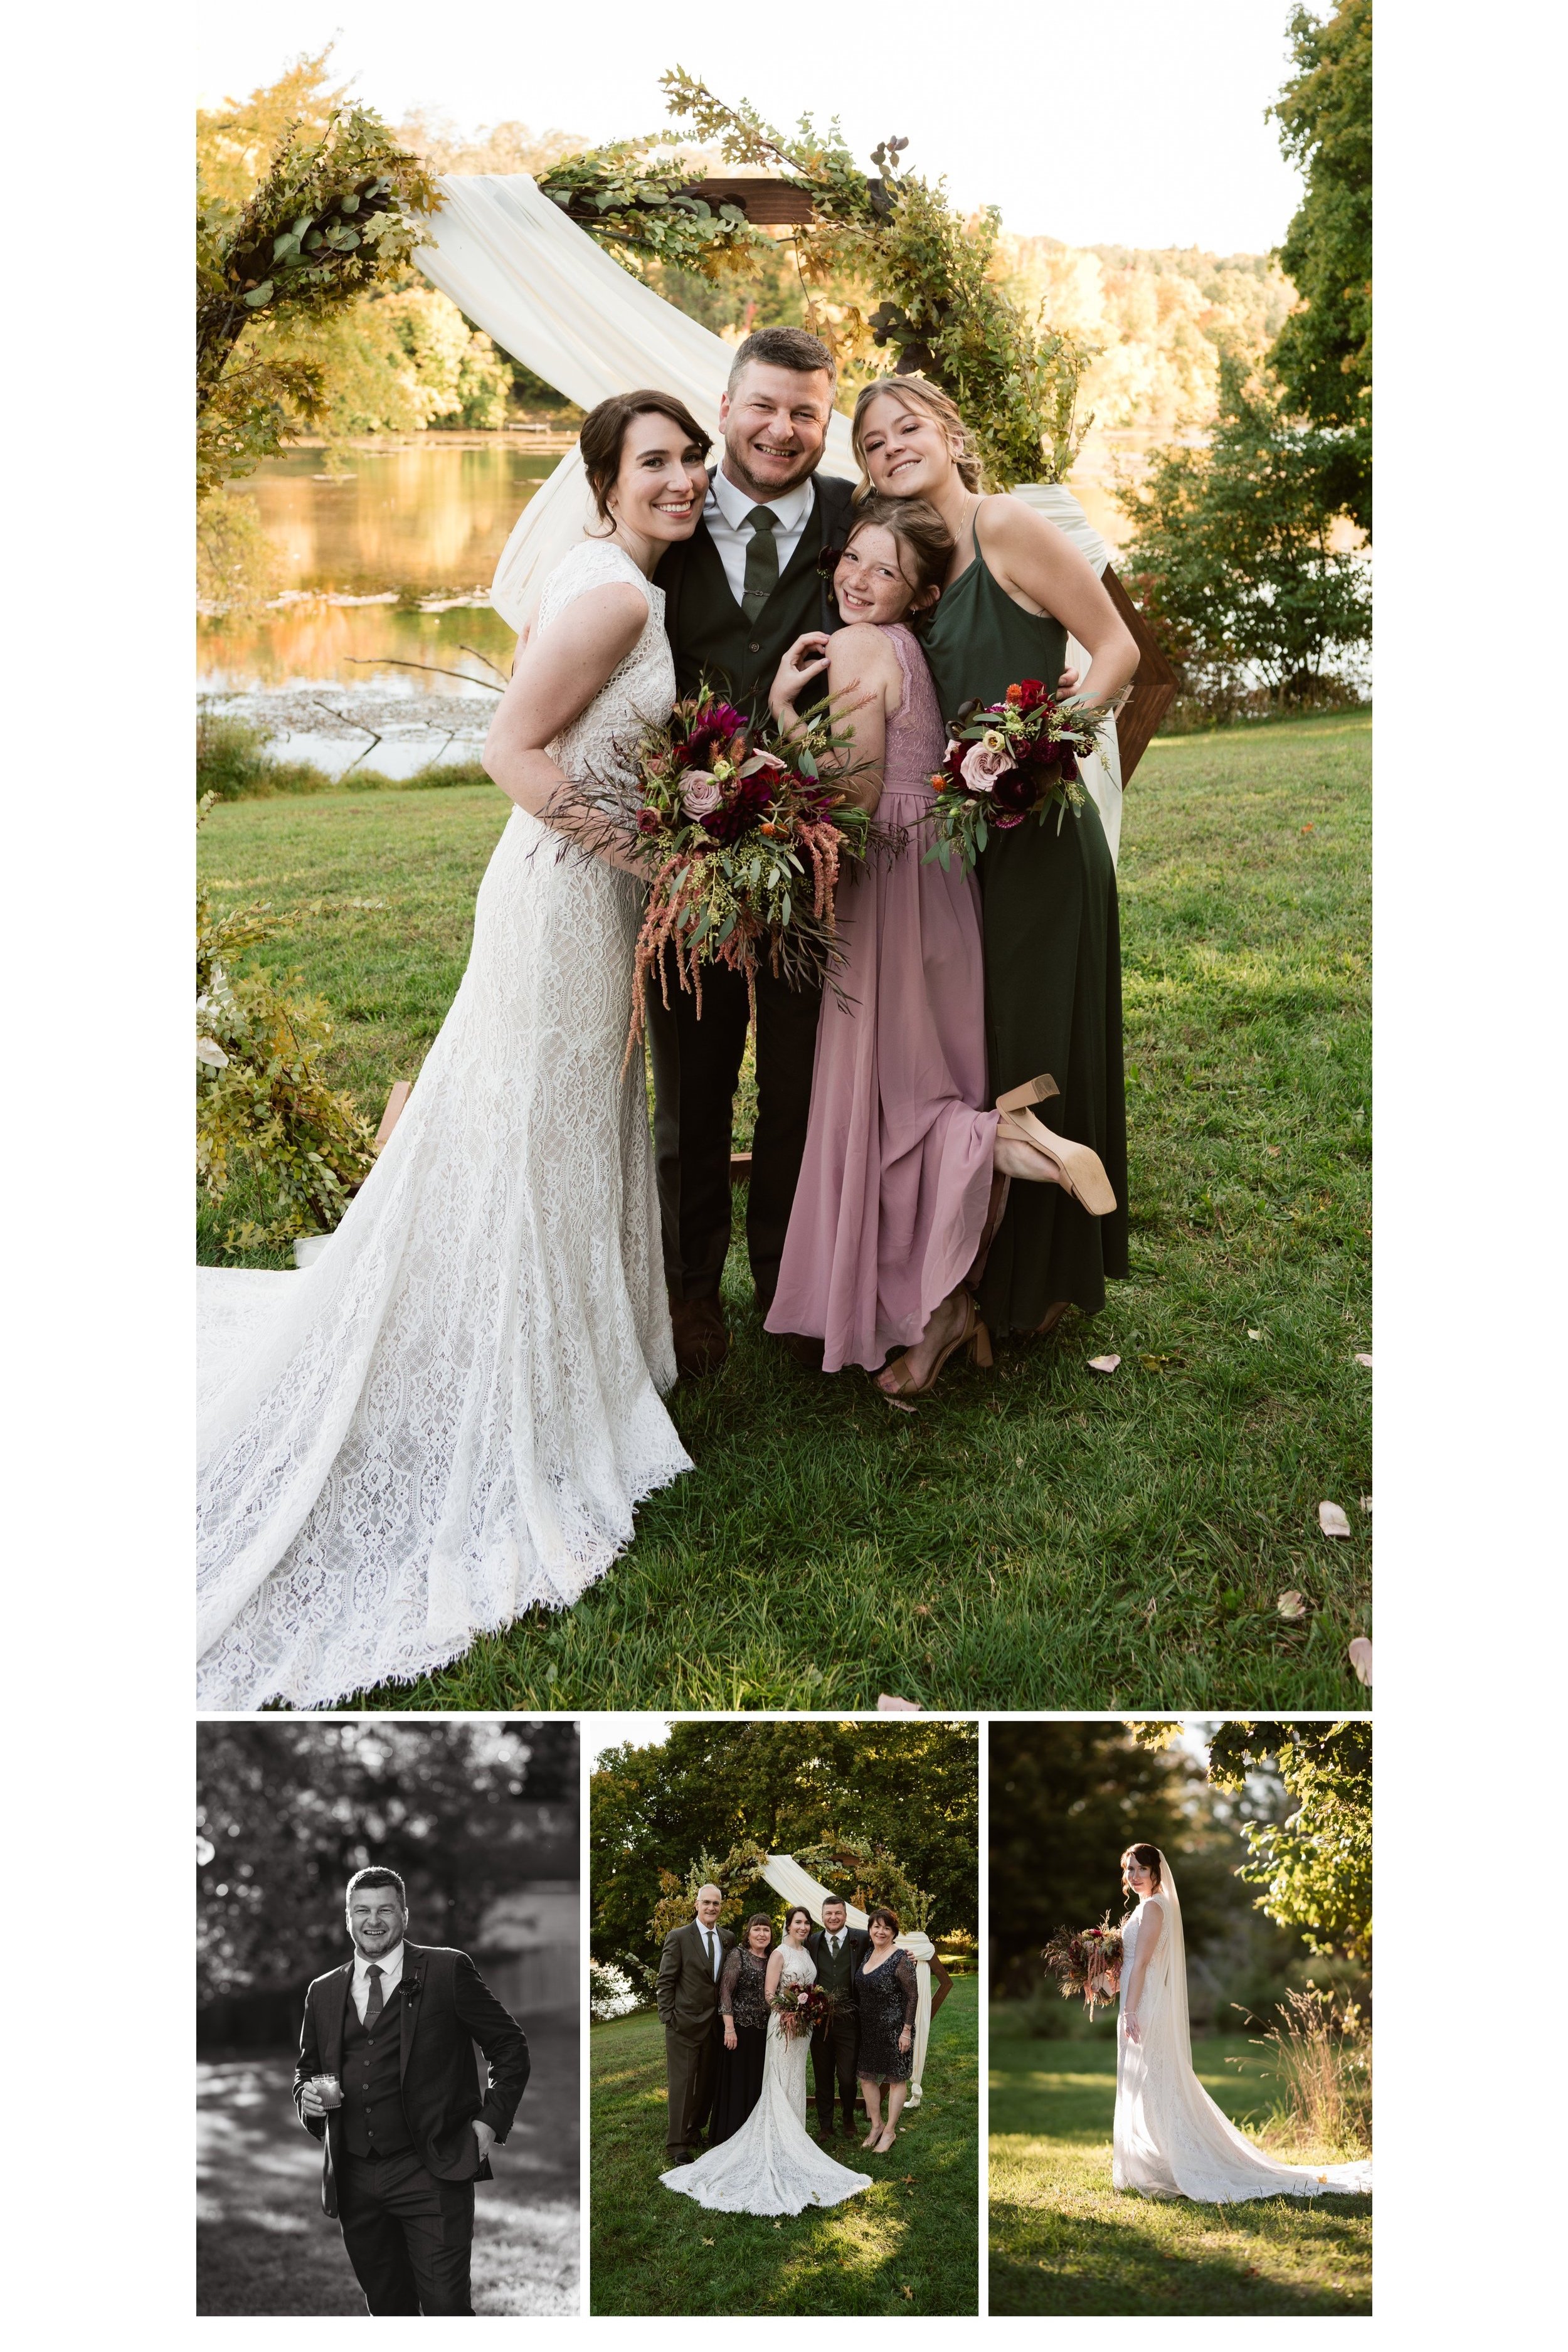 Vanderbilt_Lakeside_Inn_Wedding_photography_fall_wedding_photographer_upstate_NY_Novella_paulette_griswold00013.jpg